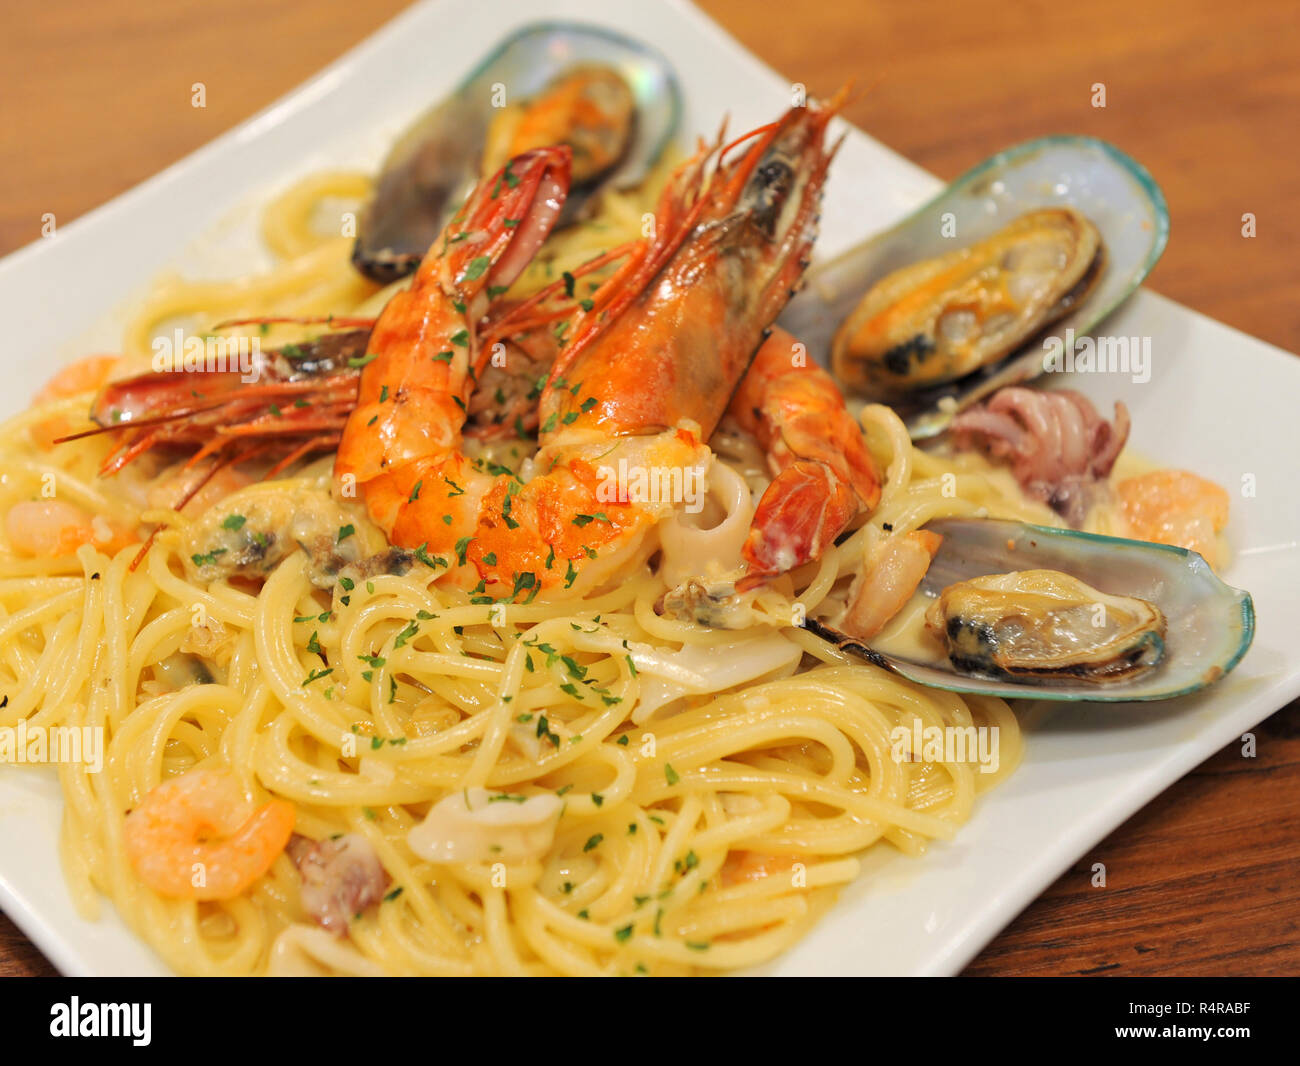 Pasta spaghetti with shrimp and clams Stock Photo